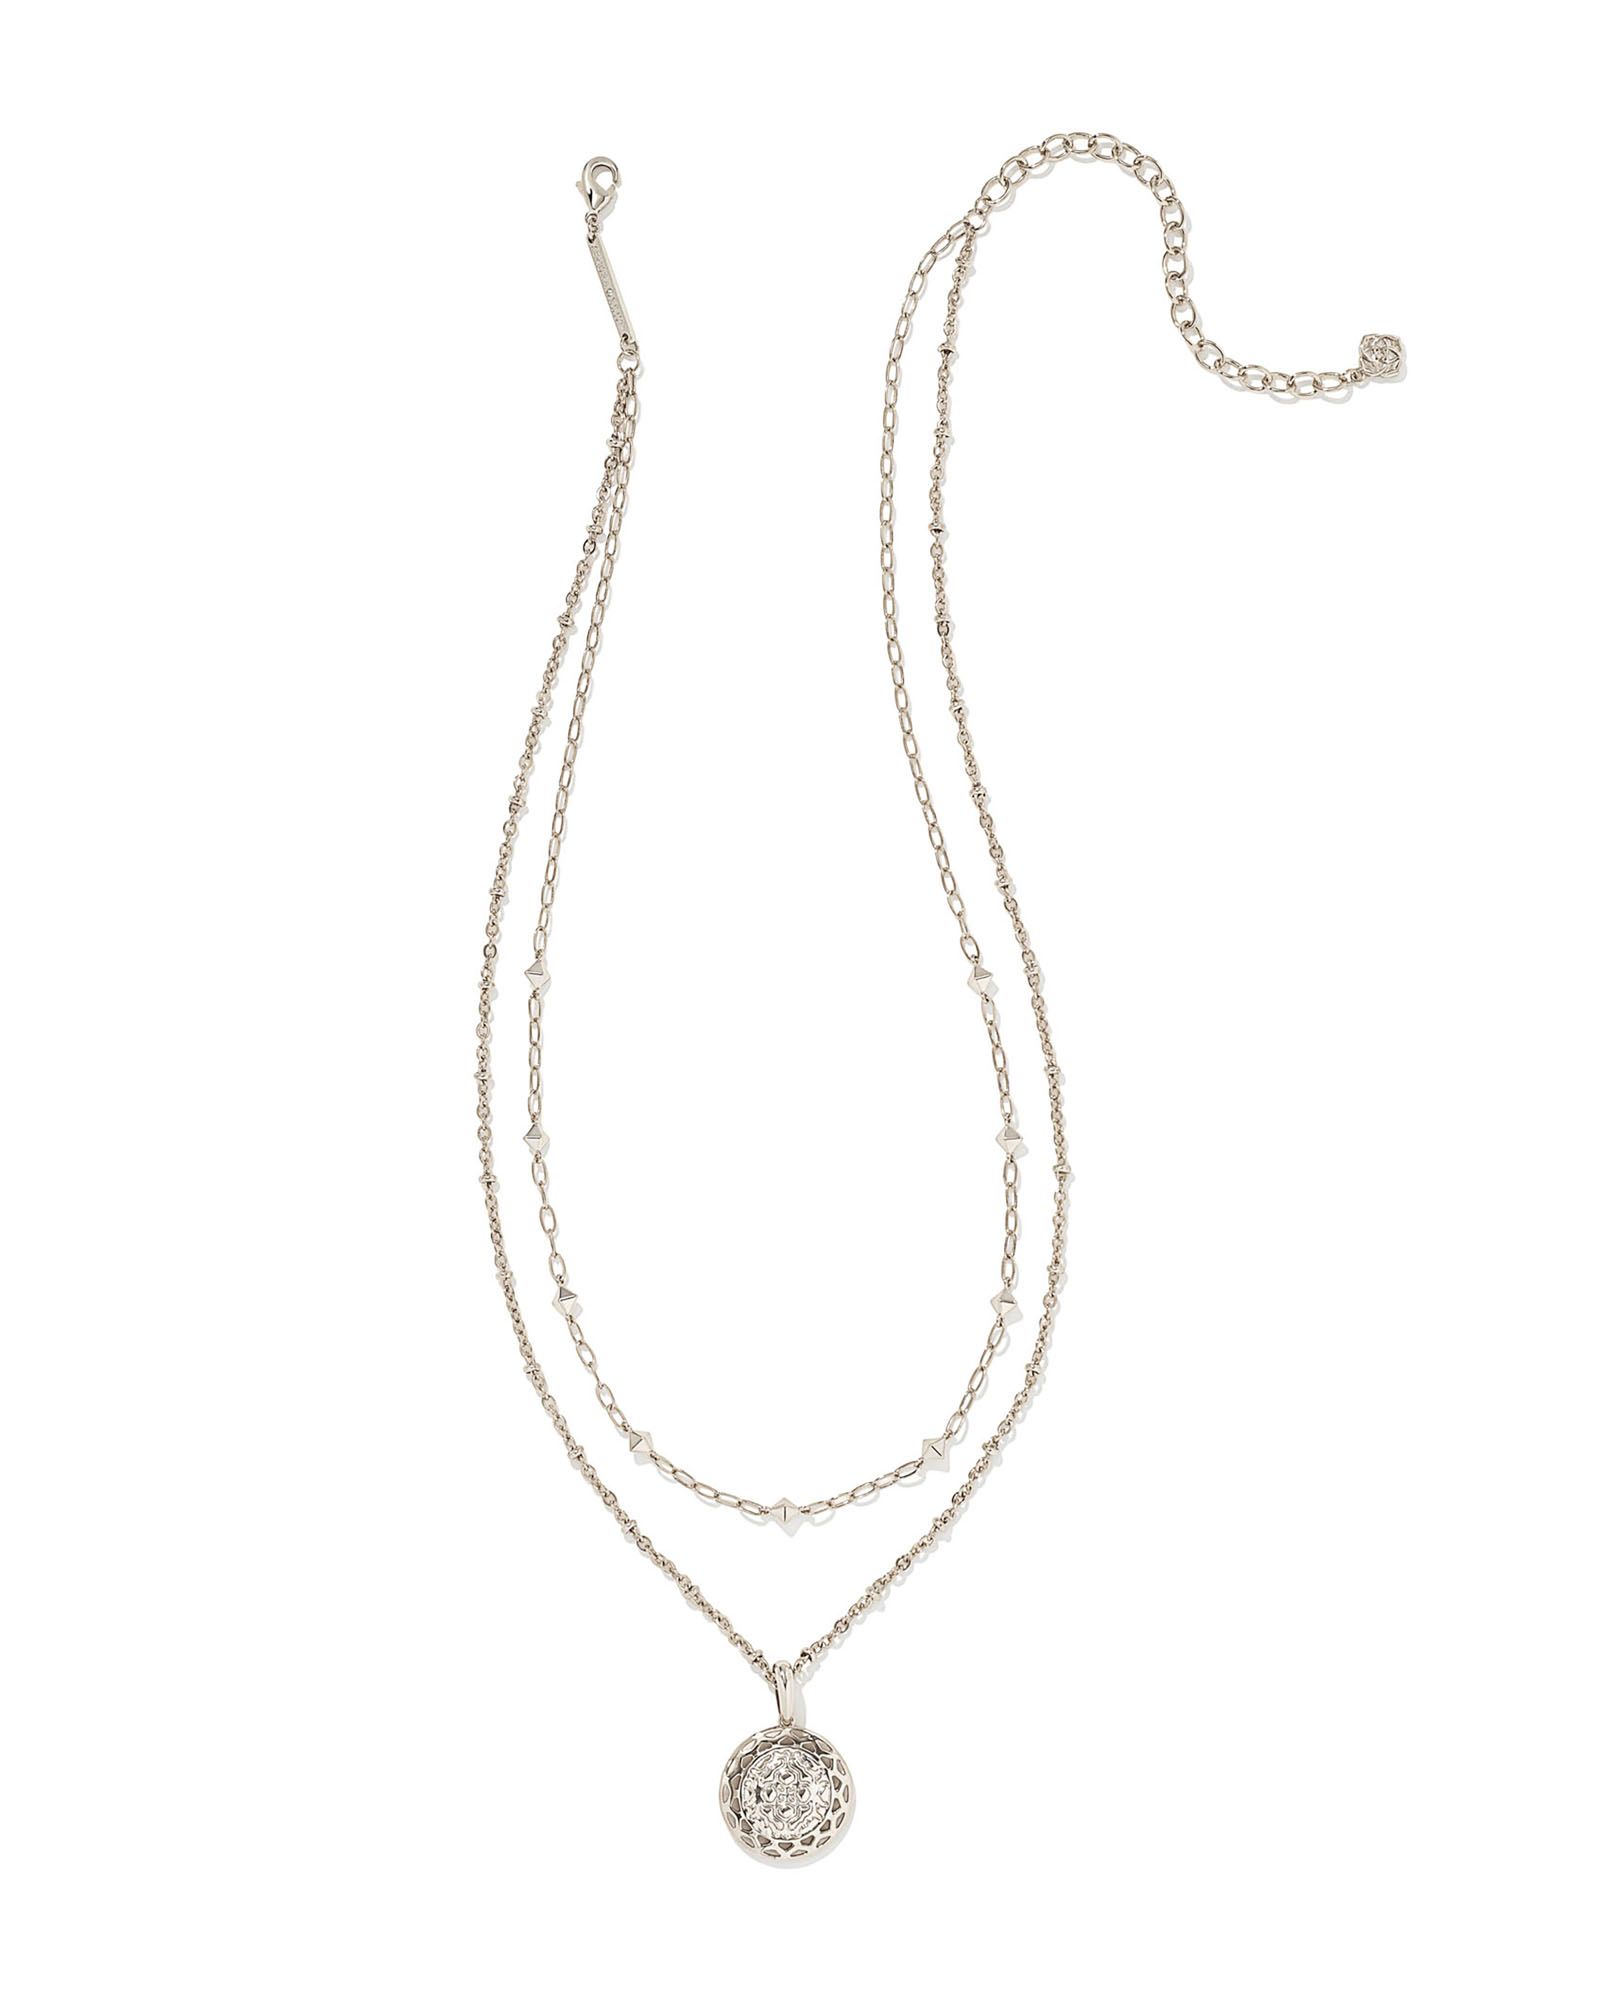 Harper Multi Strand Necklace in Silver | Kendra Scott | Kendra Scott